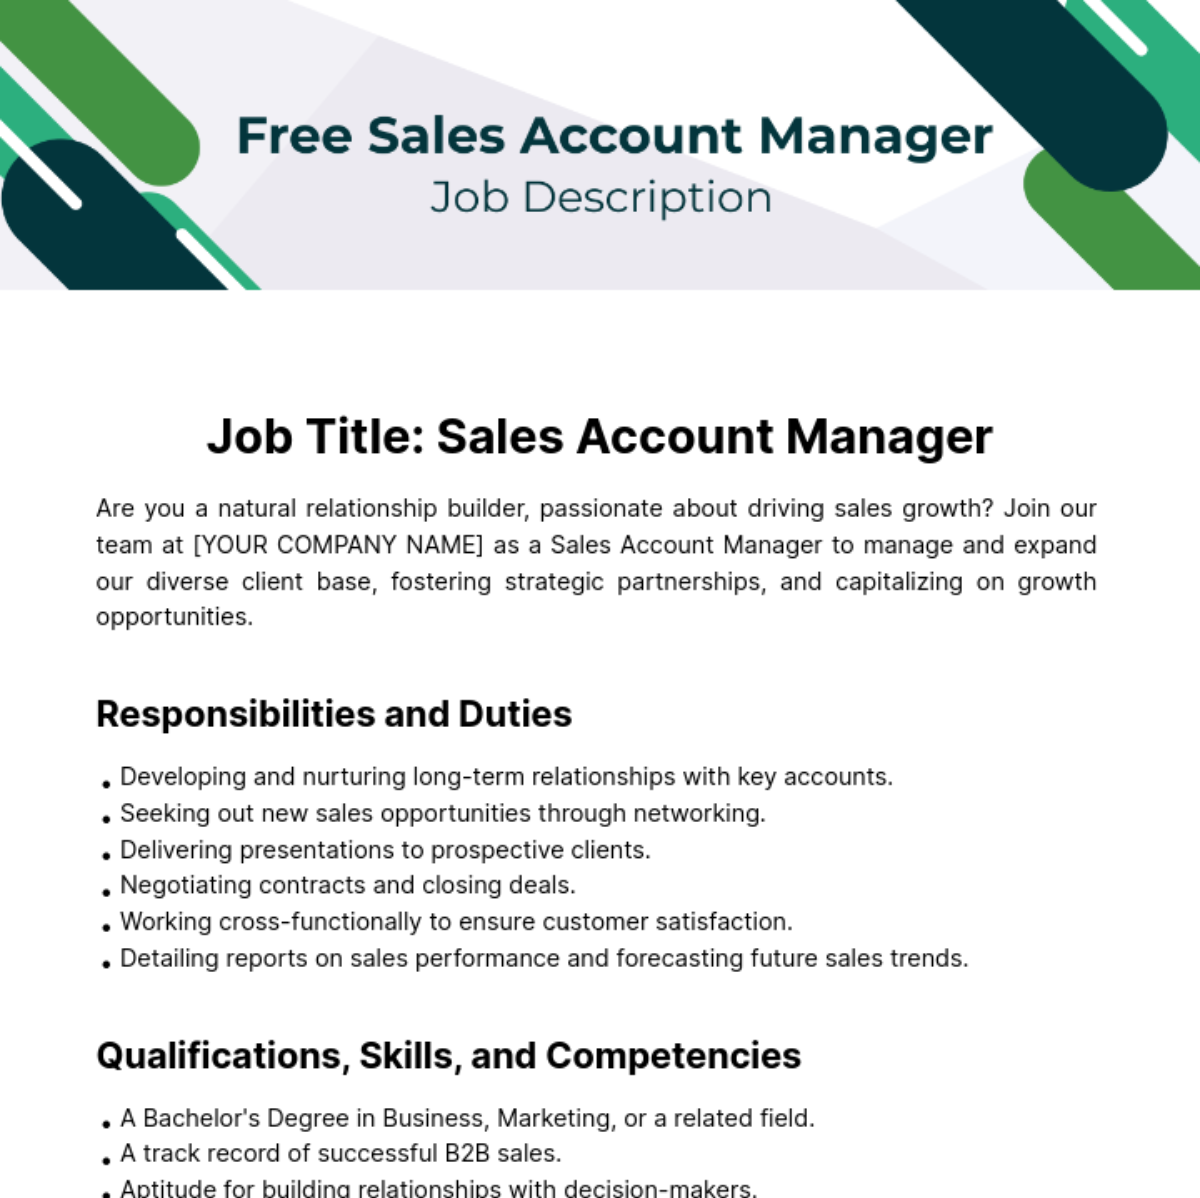 Free Sales Account Manager Job Description Template